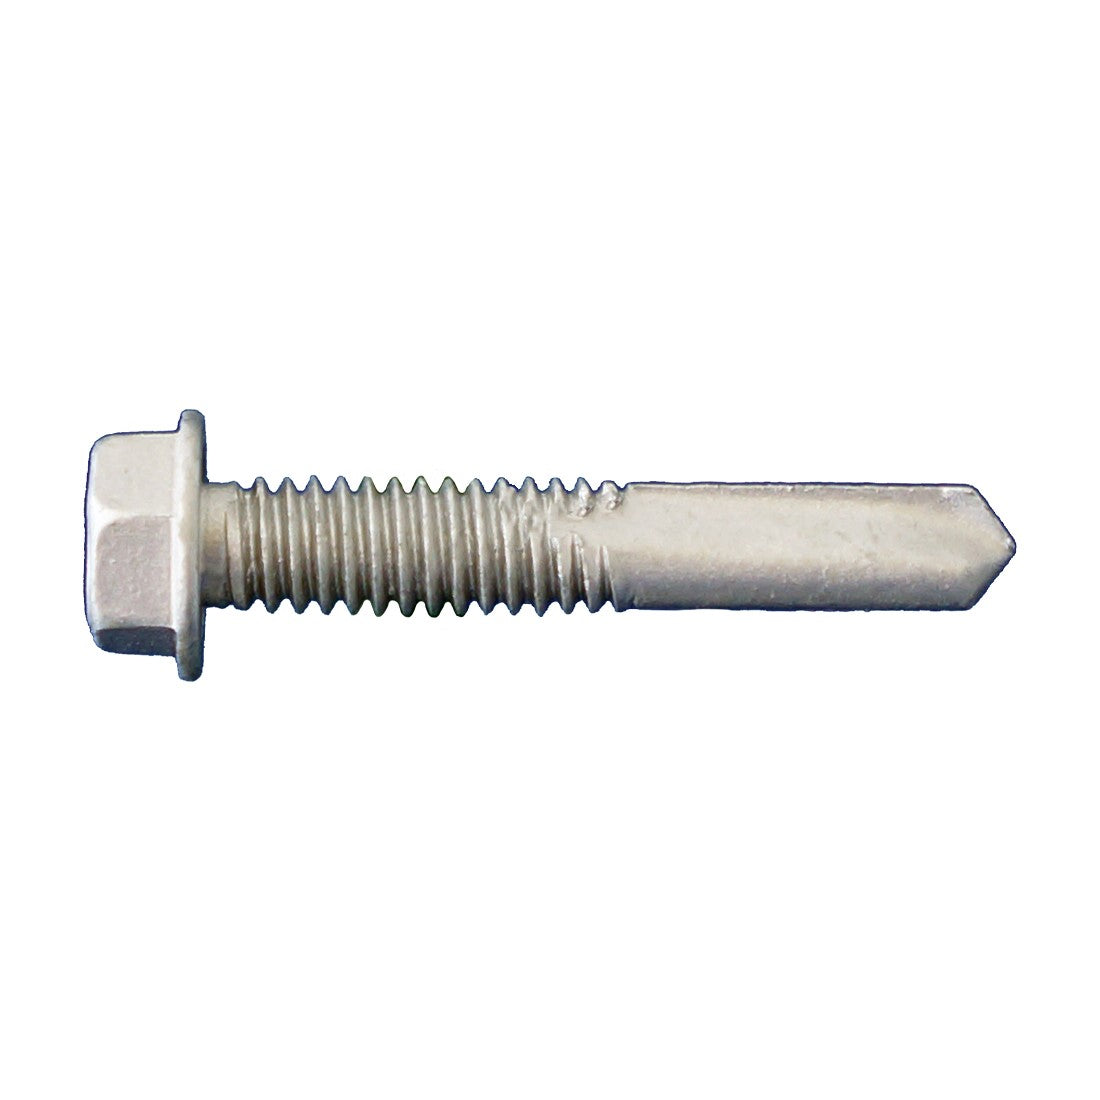 #1224 x 112 inch SelfDrilling Metal Screw w#5 Point Hex Head DaggerGuard Coating Pkg 2000